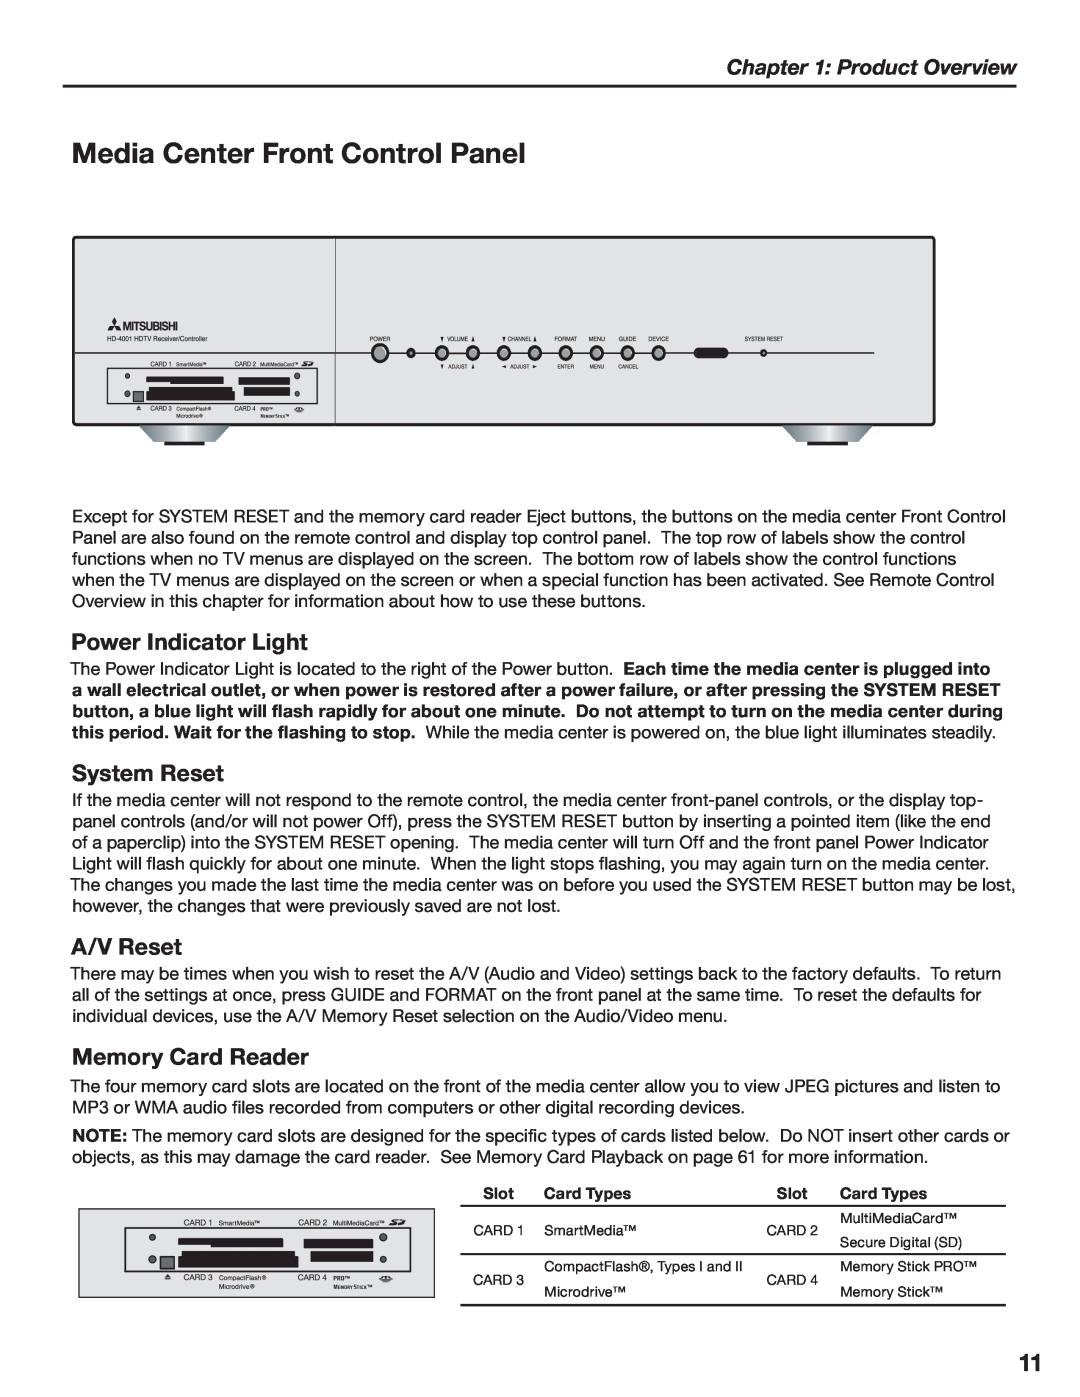 Mitsubishi Electronics LT-3780, LT-3280 Media Center Front Control Panel, Power Indicator Light, System Reset, A/V Reset 